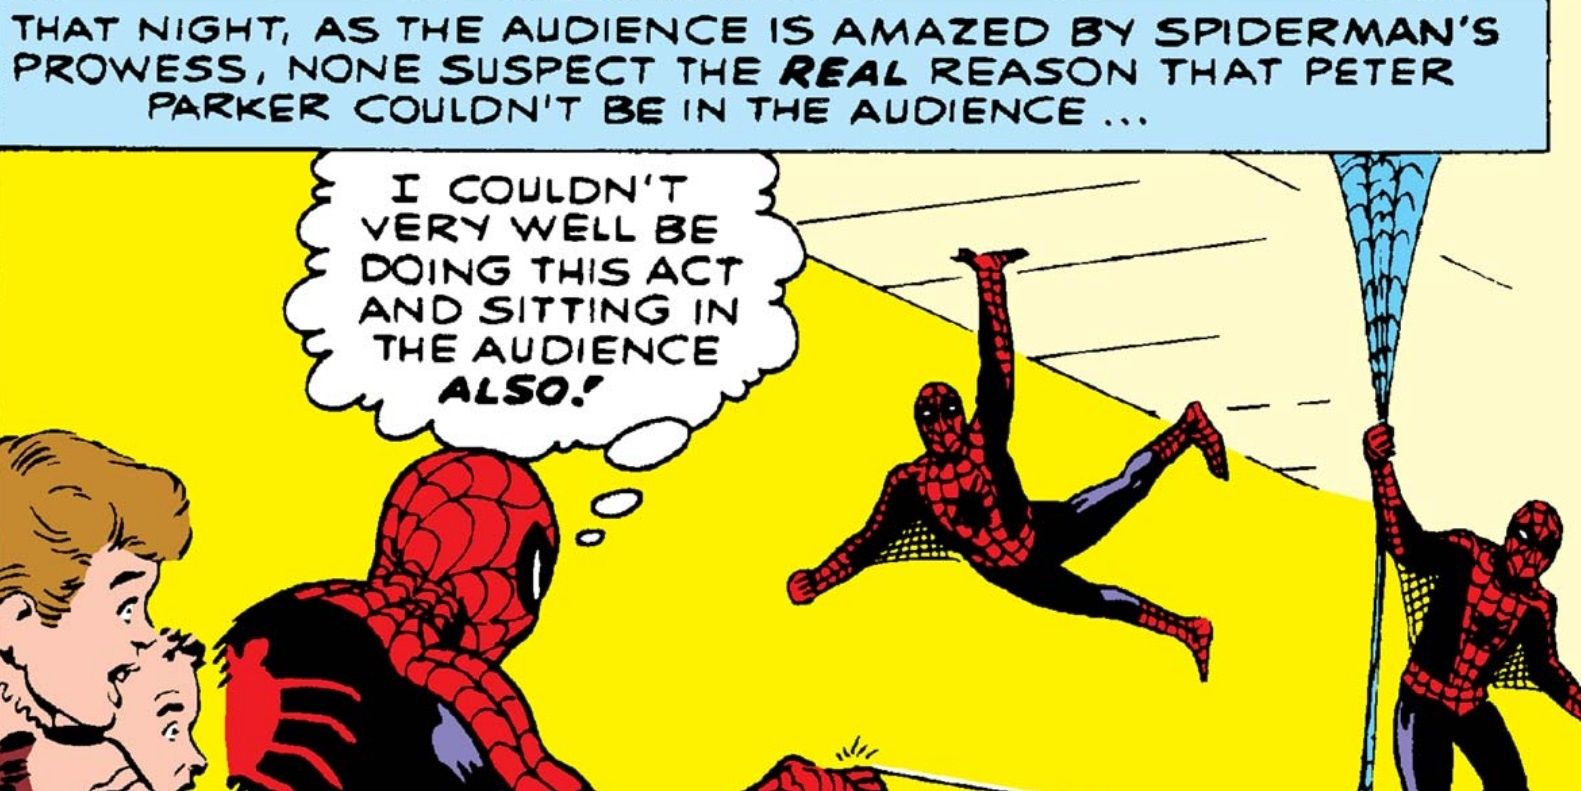 Ditko Spider-Man drew The Amazing Spider-Man #1 where Spider-Man shows off powers